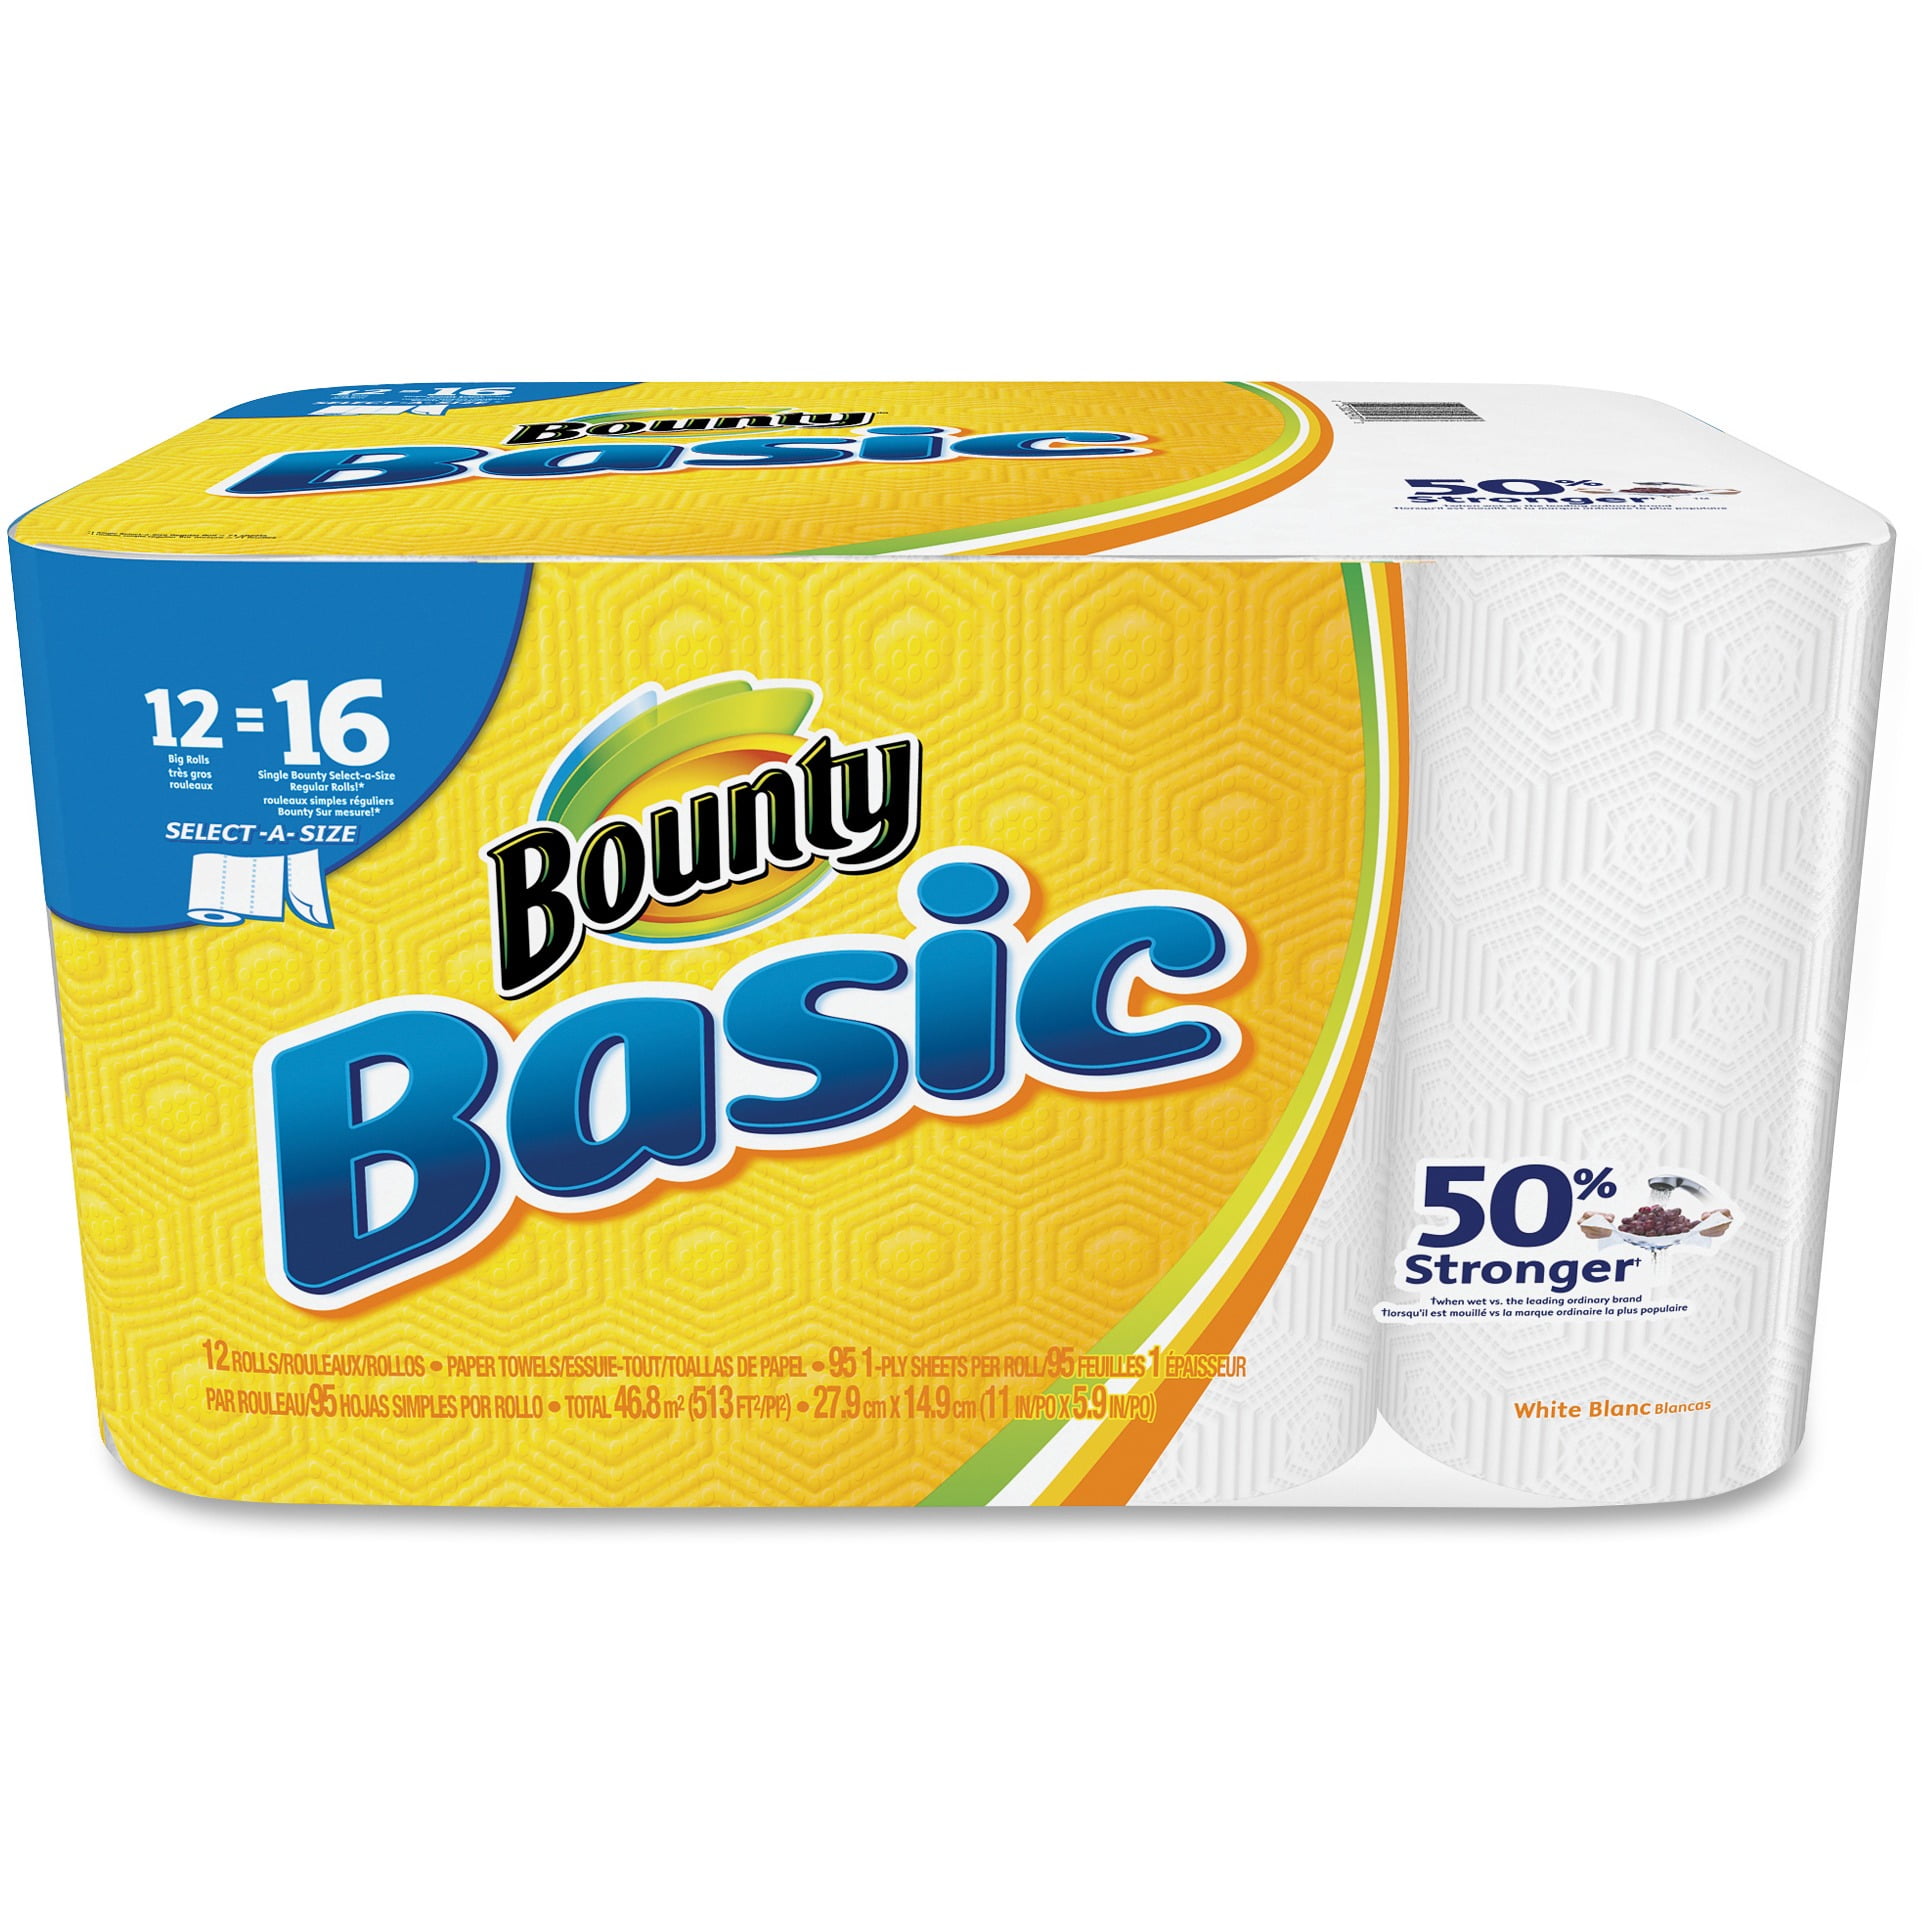 Bounty Basic Paper Towels Select A Size 12 Big Rolls 09cf3e59 F3c6 474b B054 568fd280a44a 1.f446974548f7de1f1b020548ed7f730b 